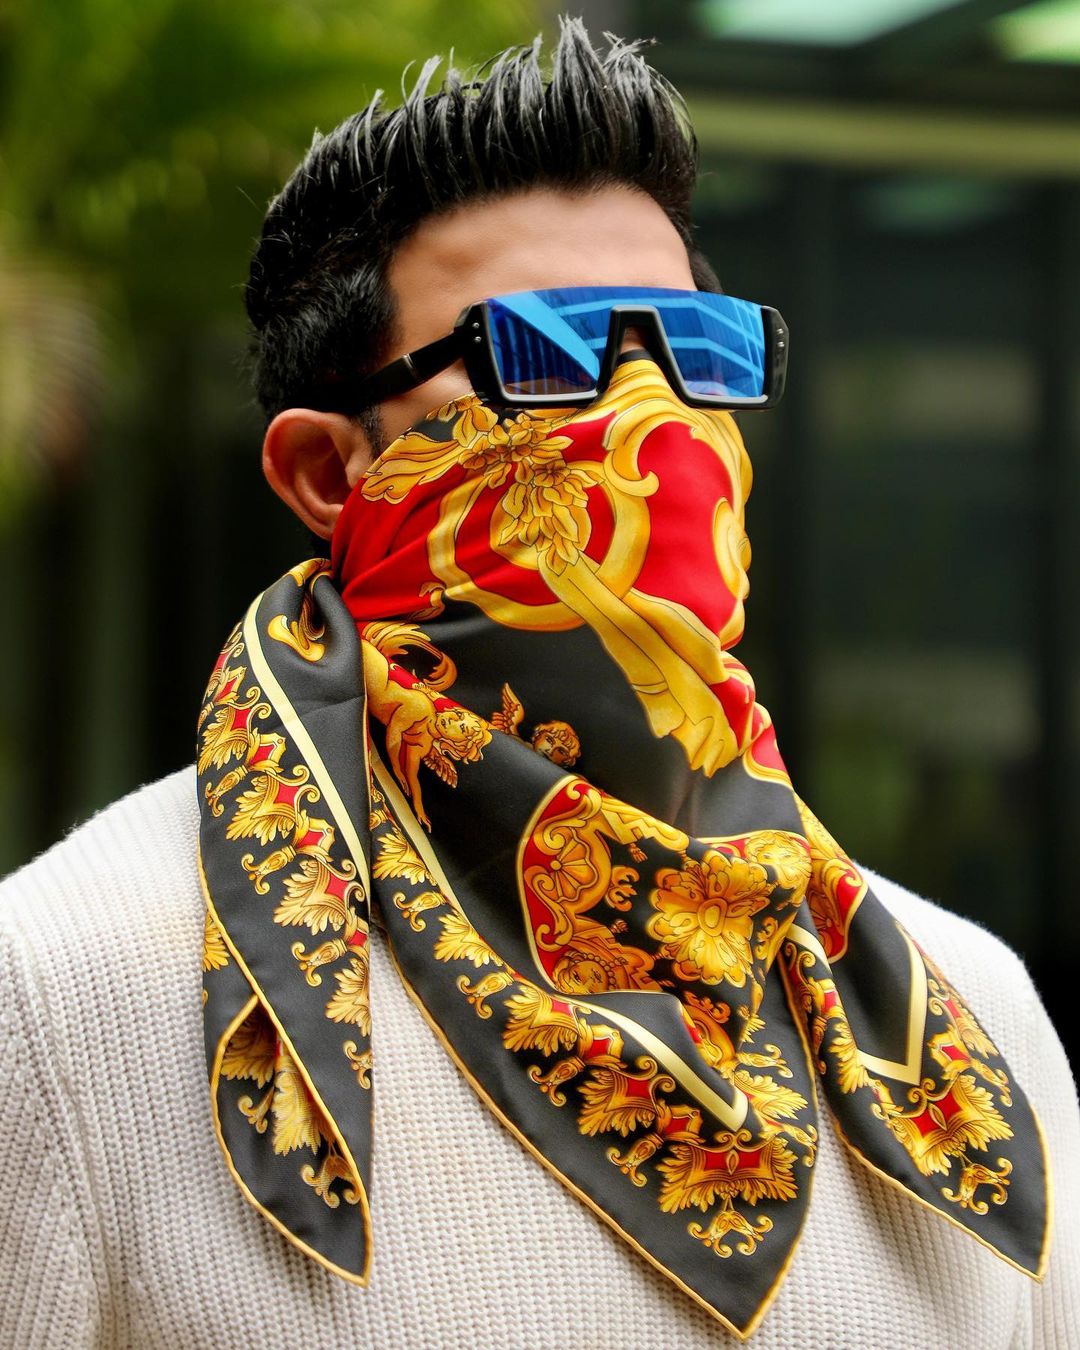 Stylish Square Sahil Khan Mirror Sunglasses For Men-Unique and Classy